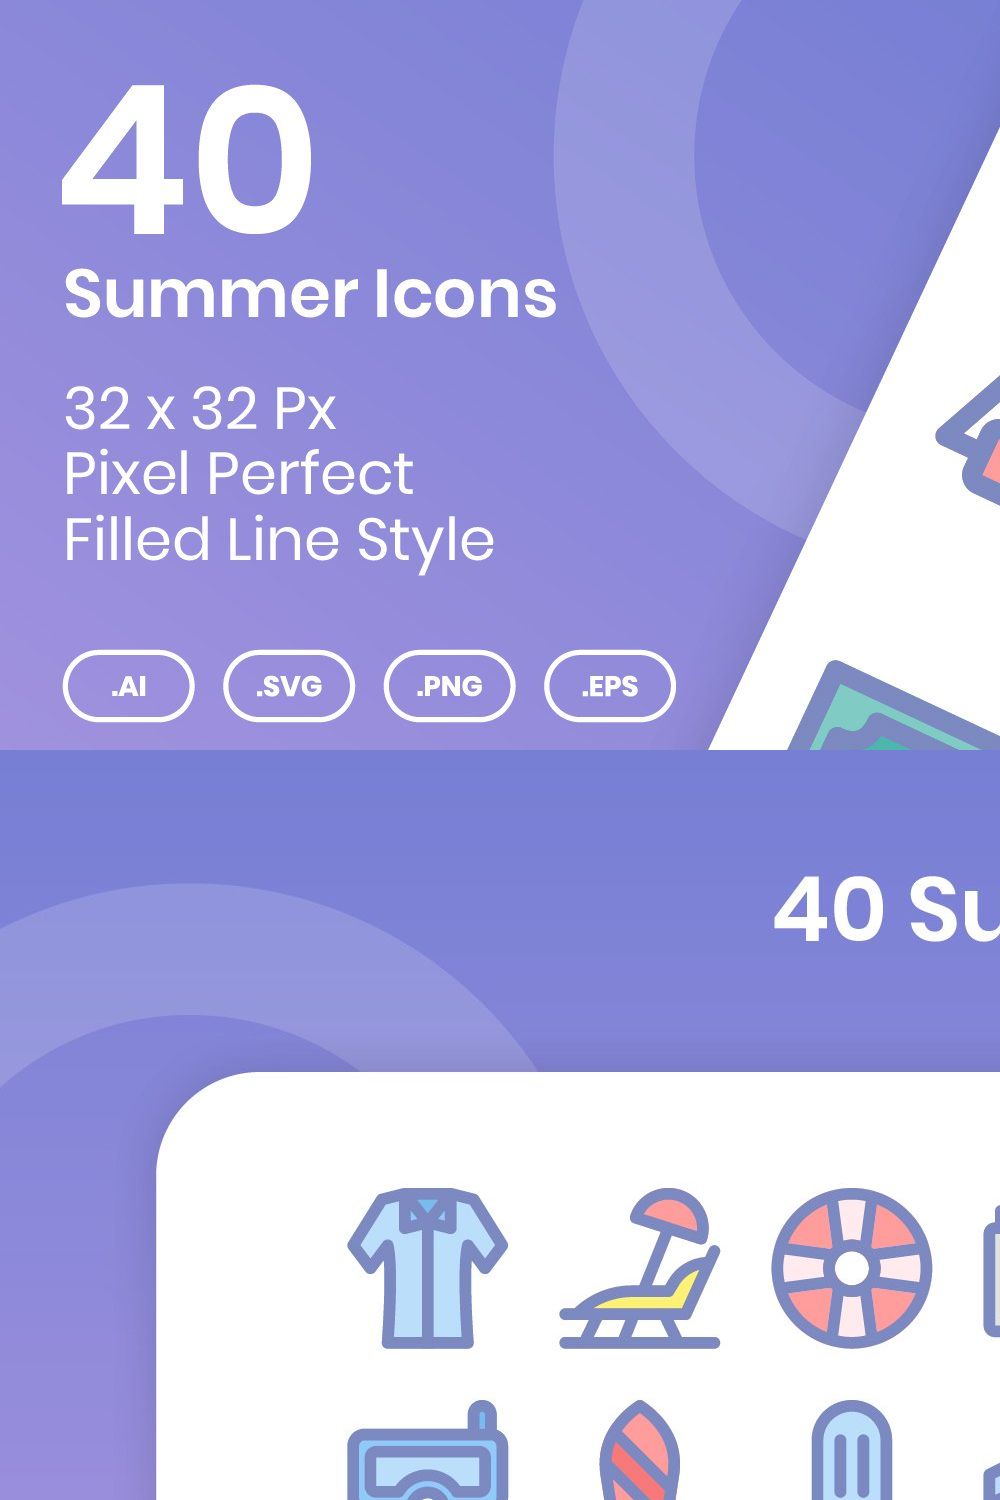 40 Summer - Filled Line pinterest preview image.